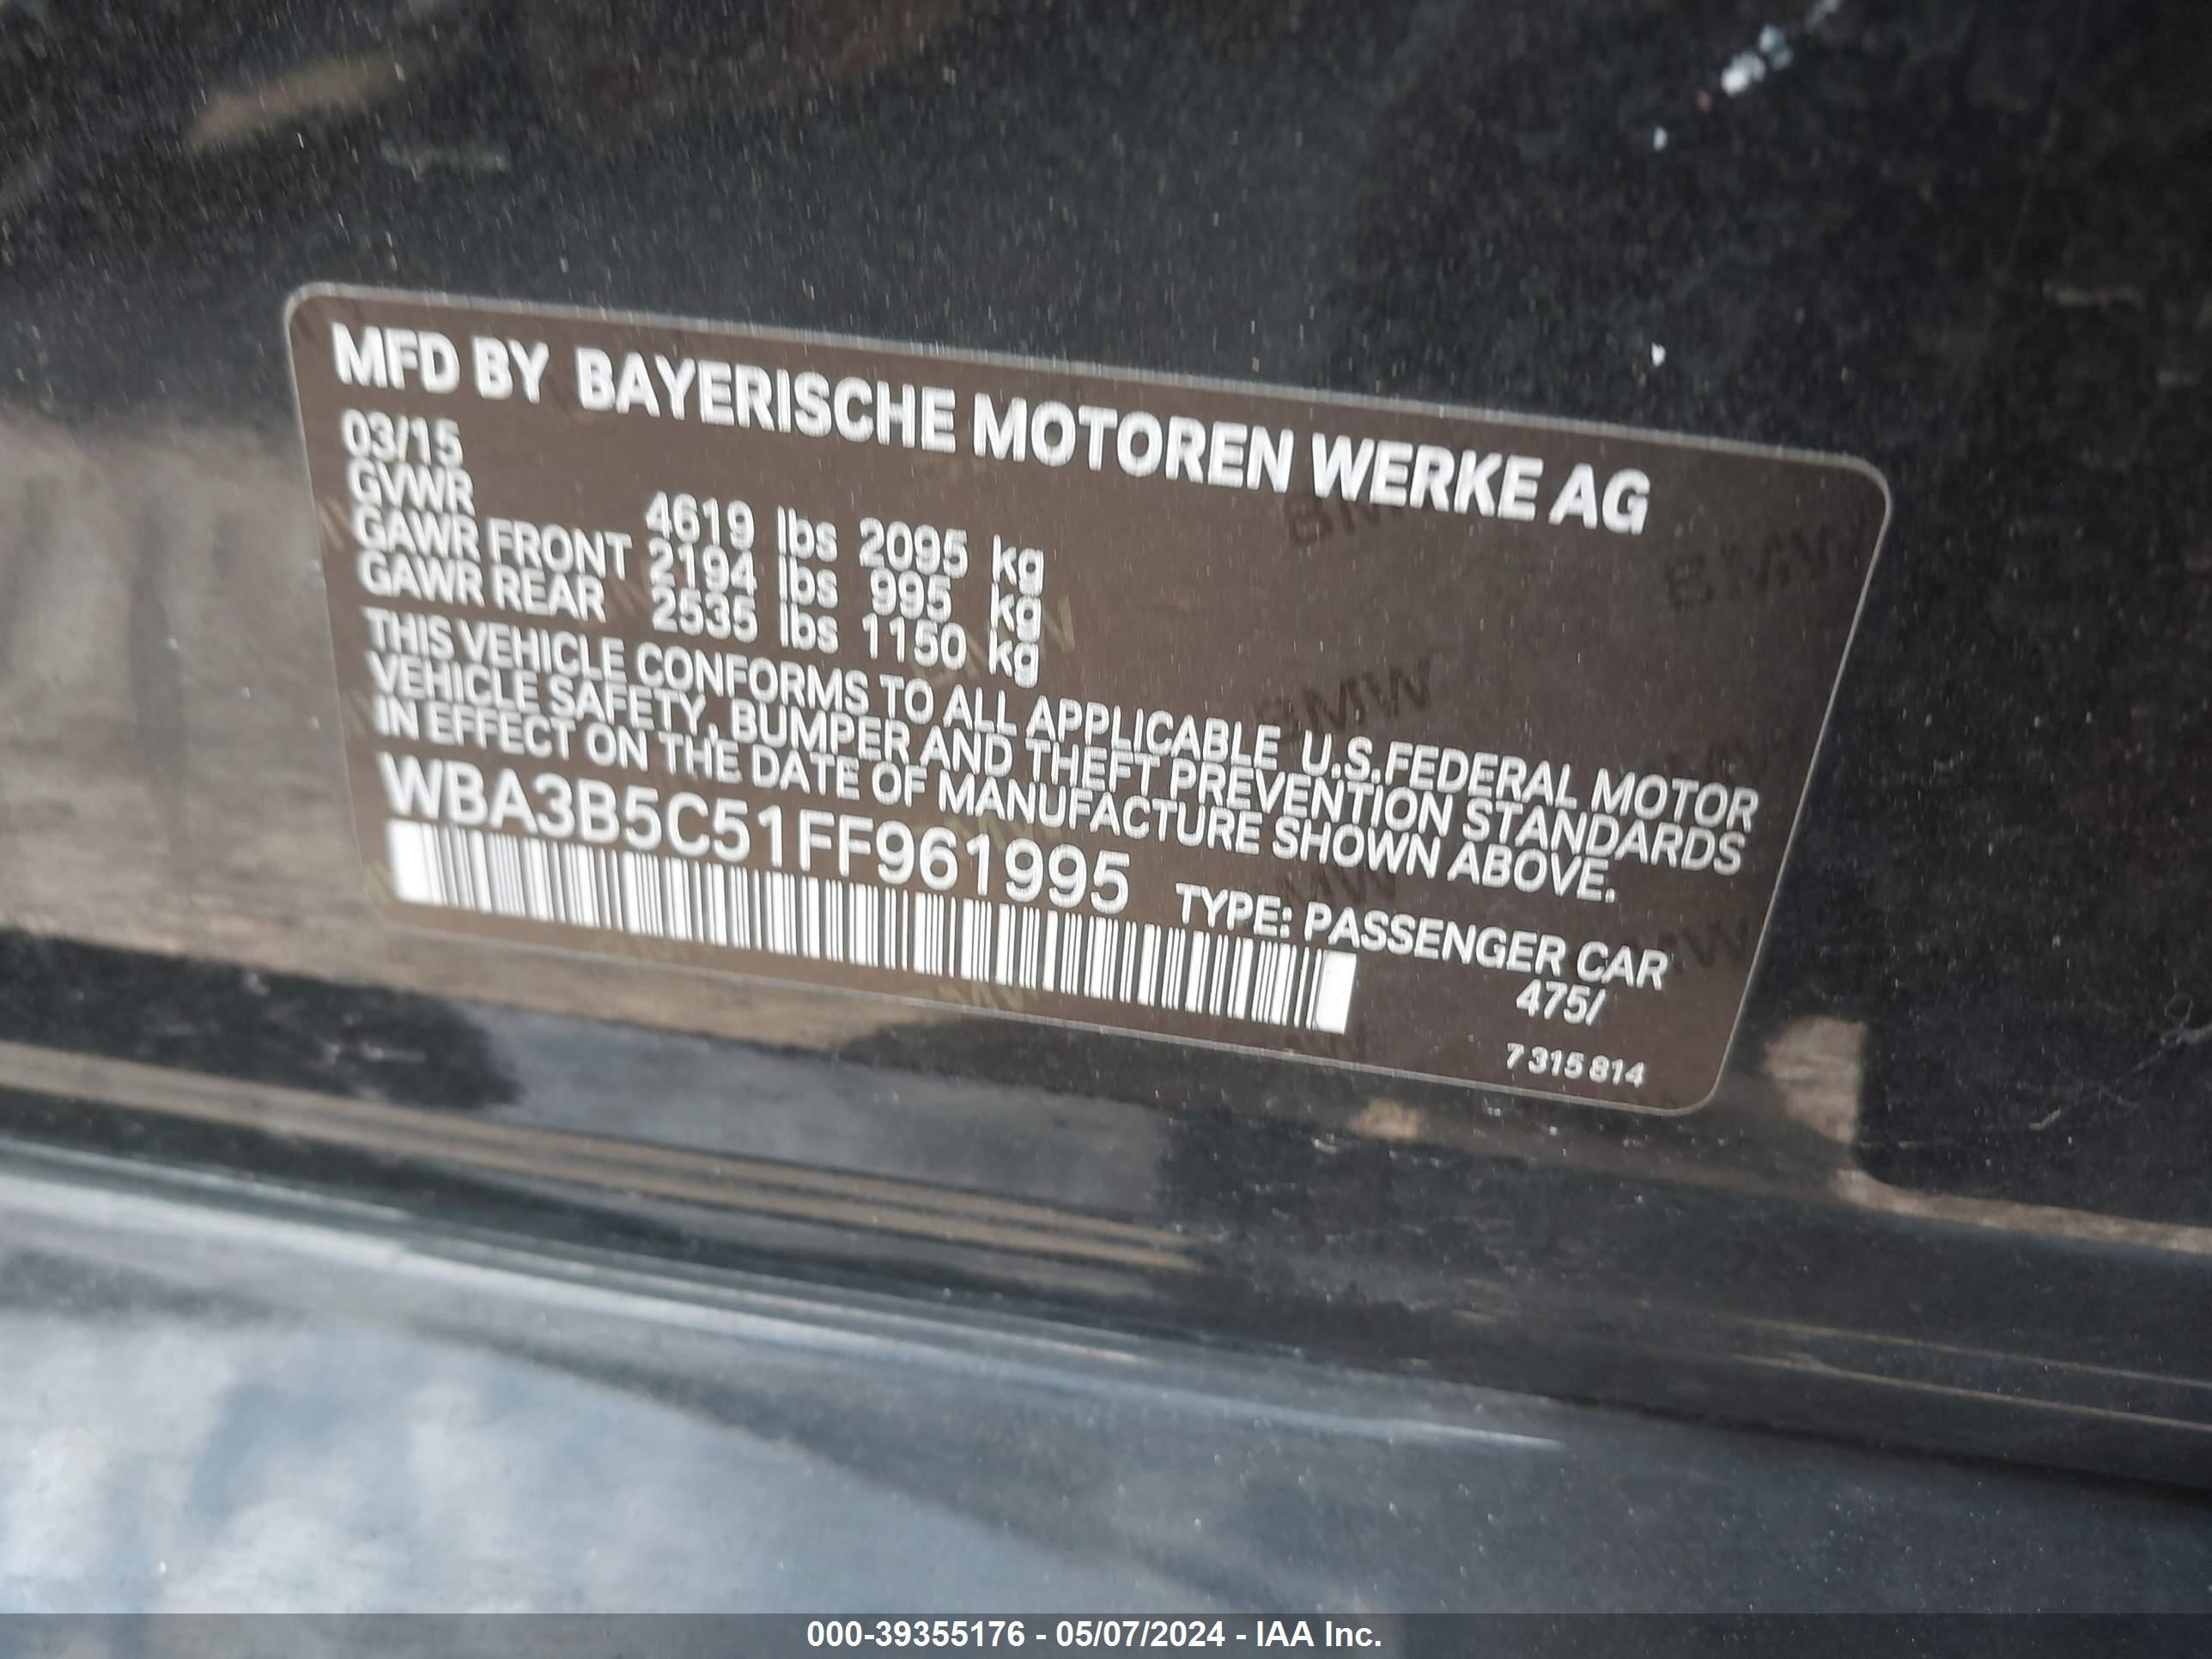 WBA3B5C51FF961995 2015 BMW 328I xDrive